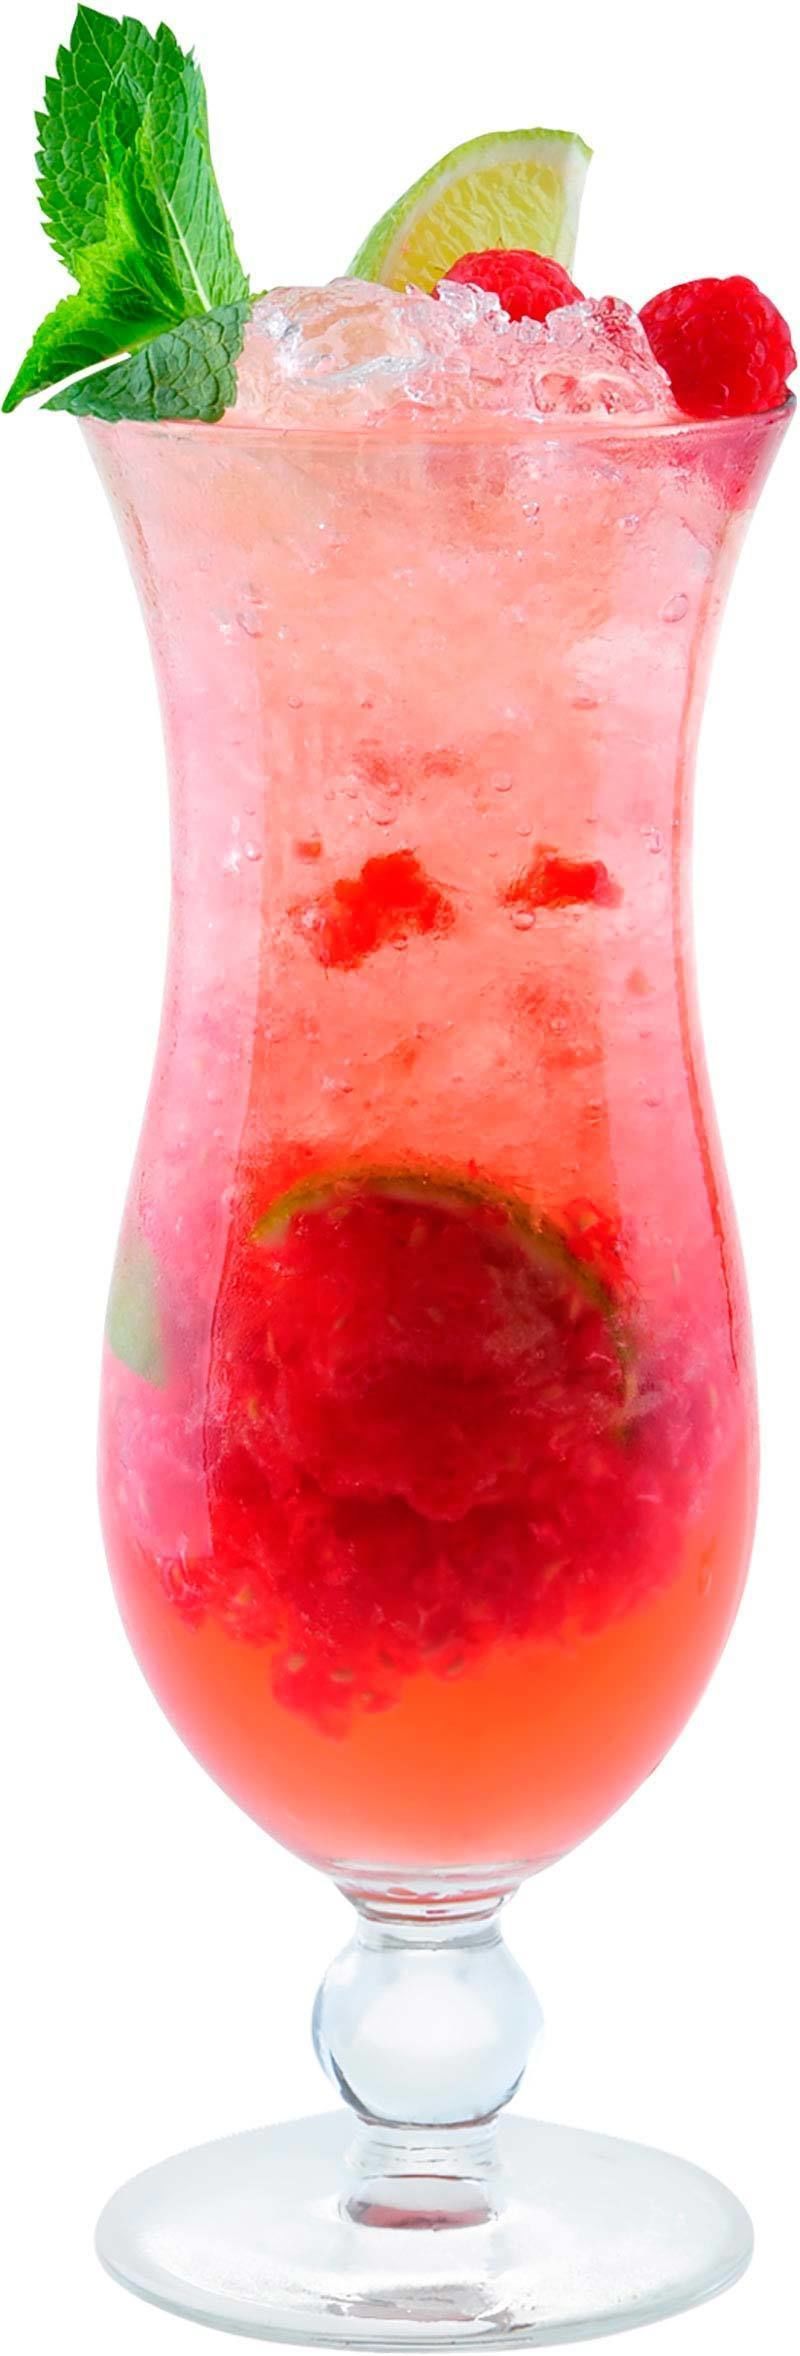 How to Make the Raspberry Lemonade